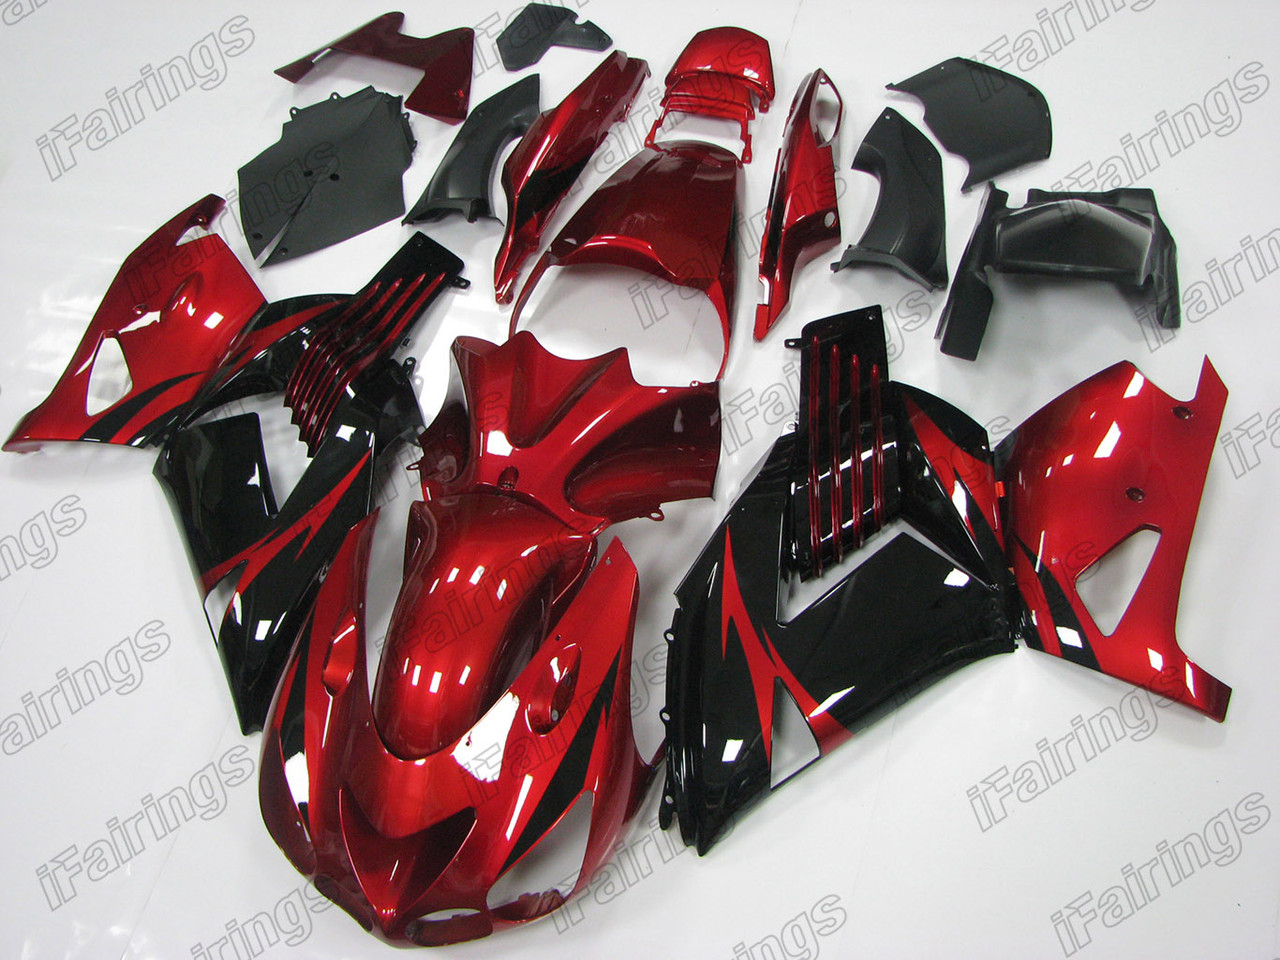 Aftermarket fairing for 2006 to 2011 Kawasaki Ninja ZX-14 red and black.